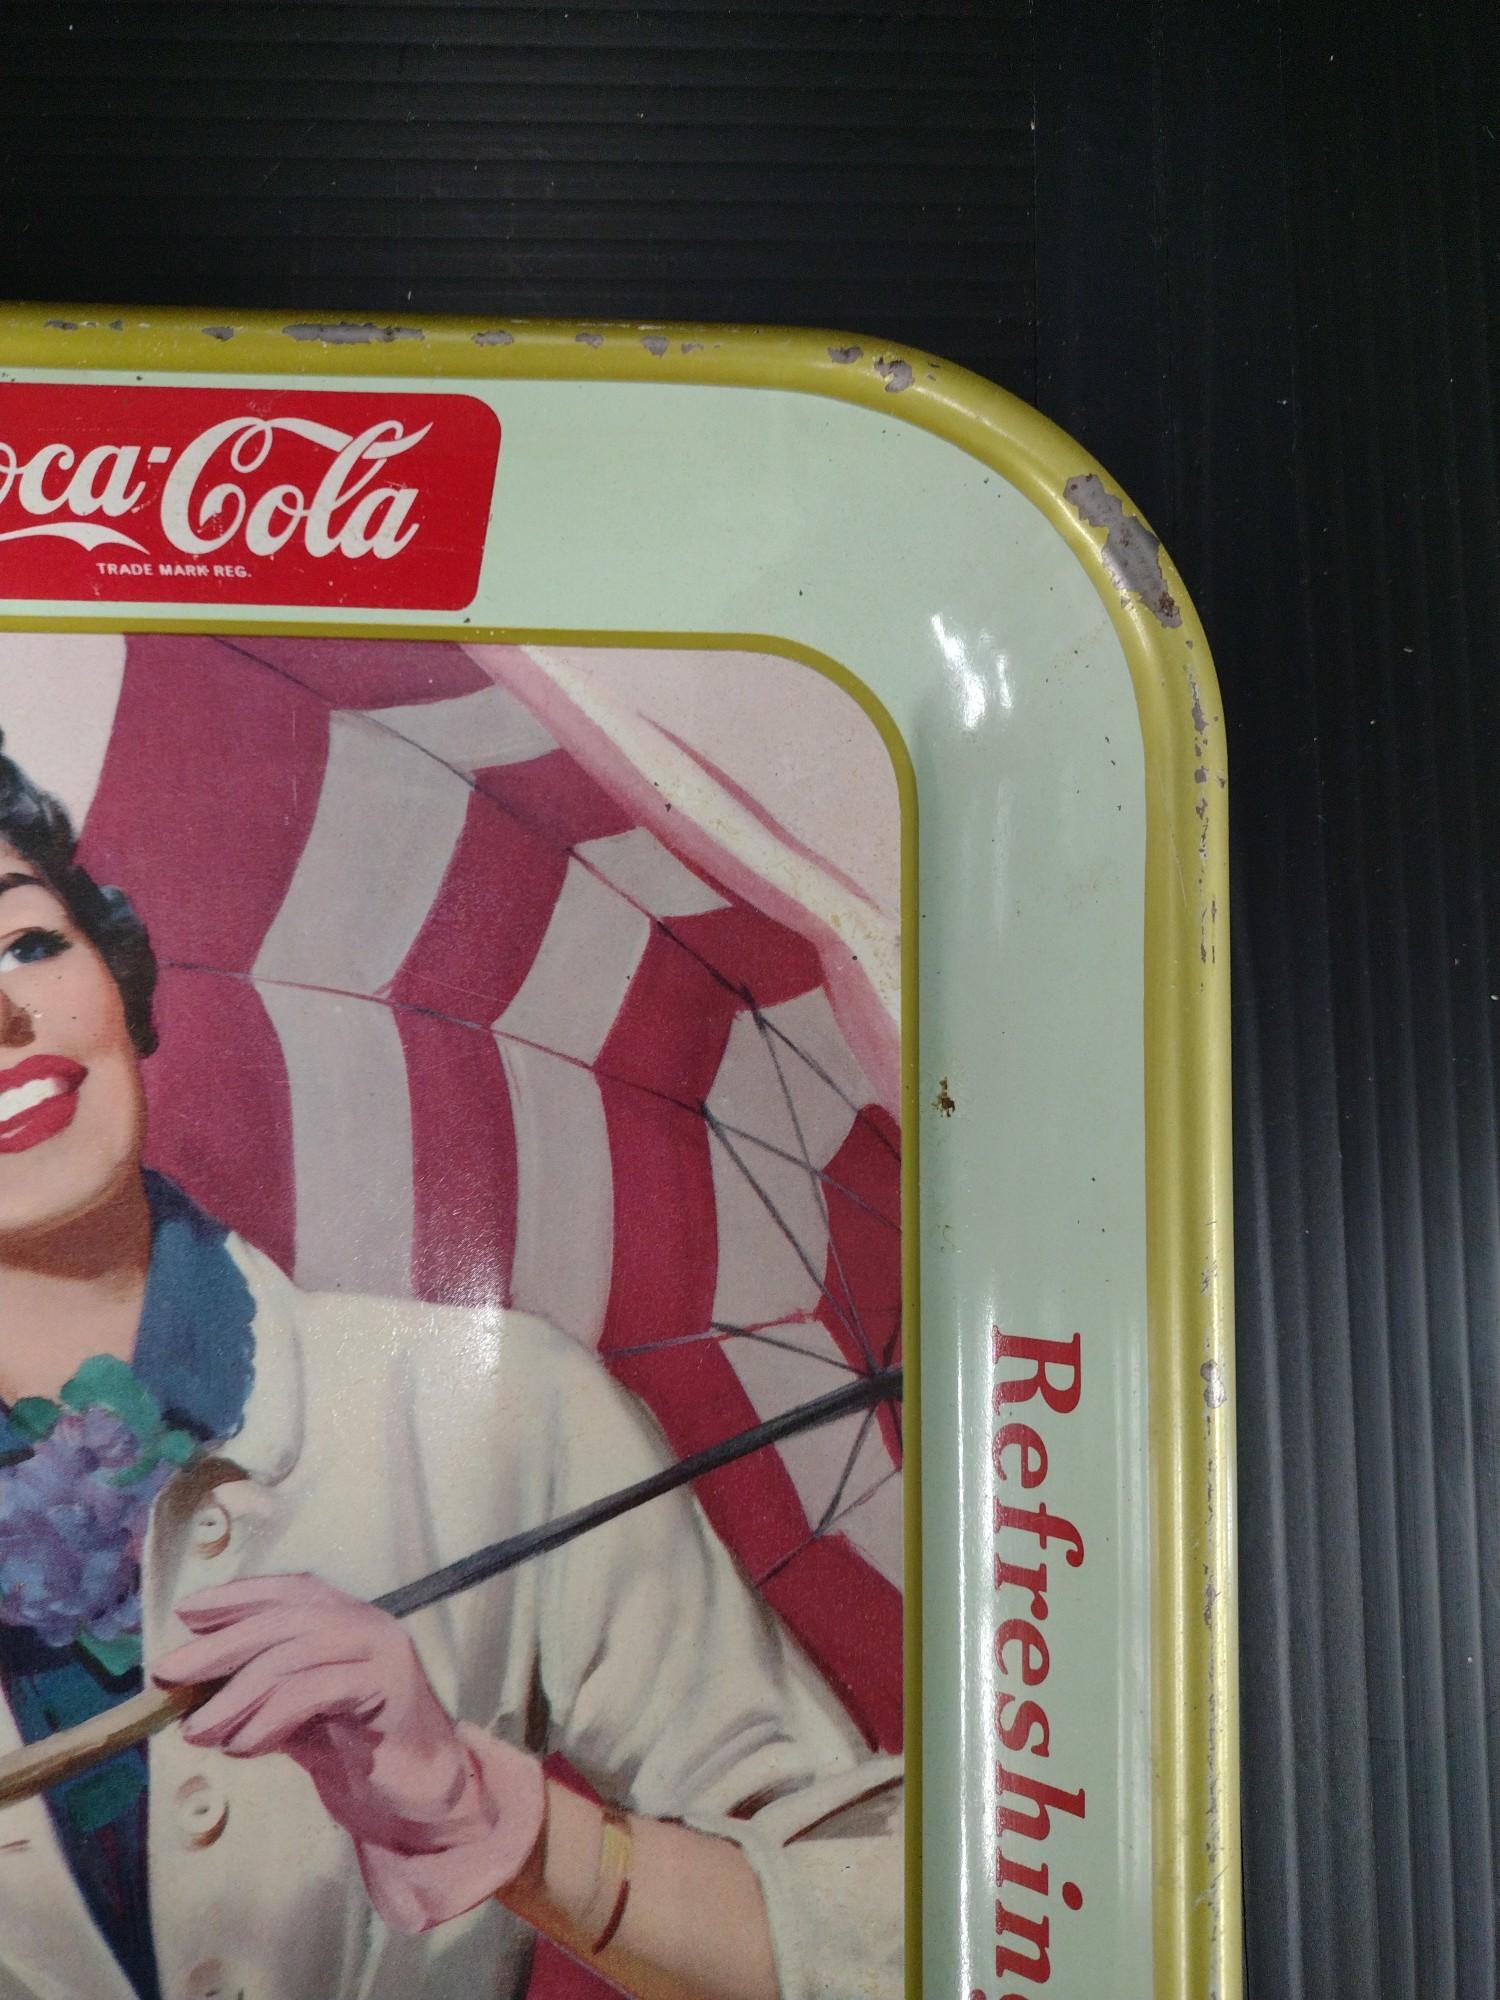 Coca-Cola Collectible Serving Tray